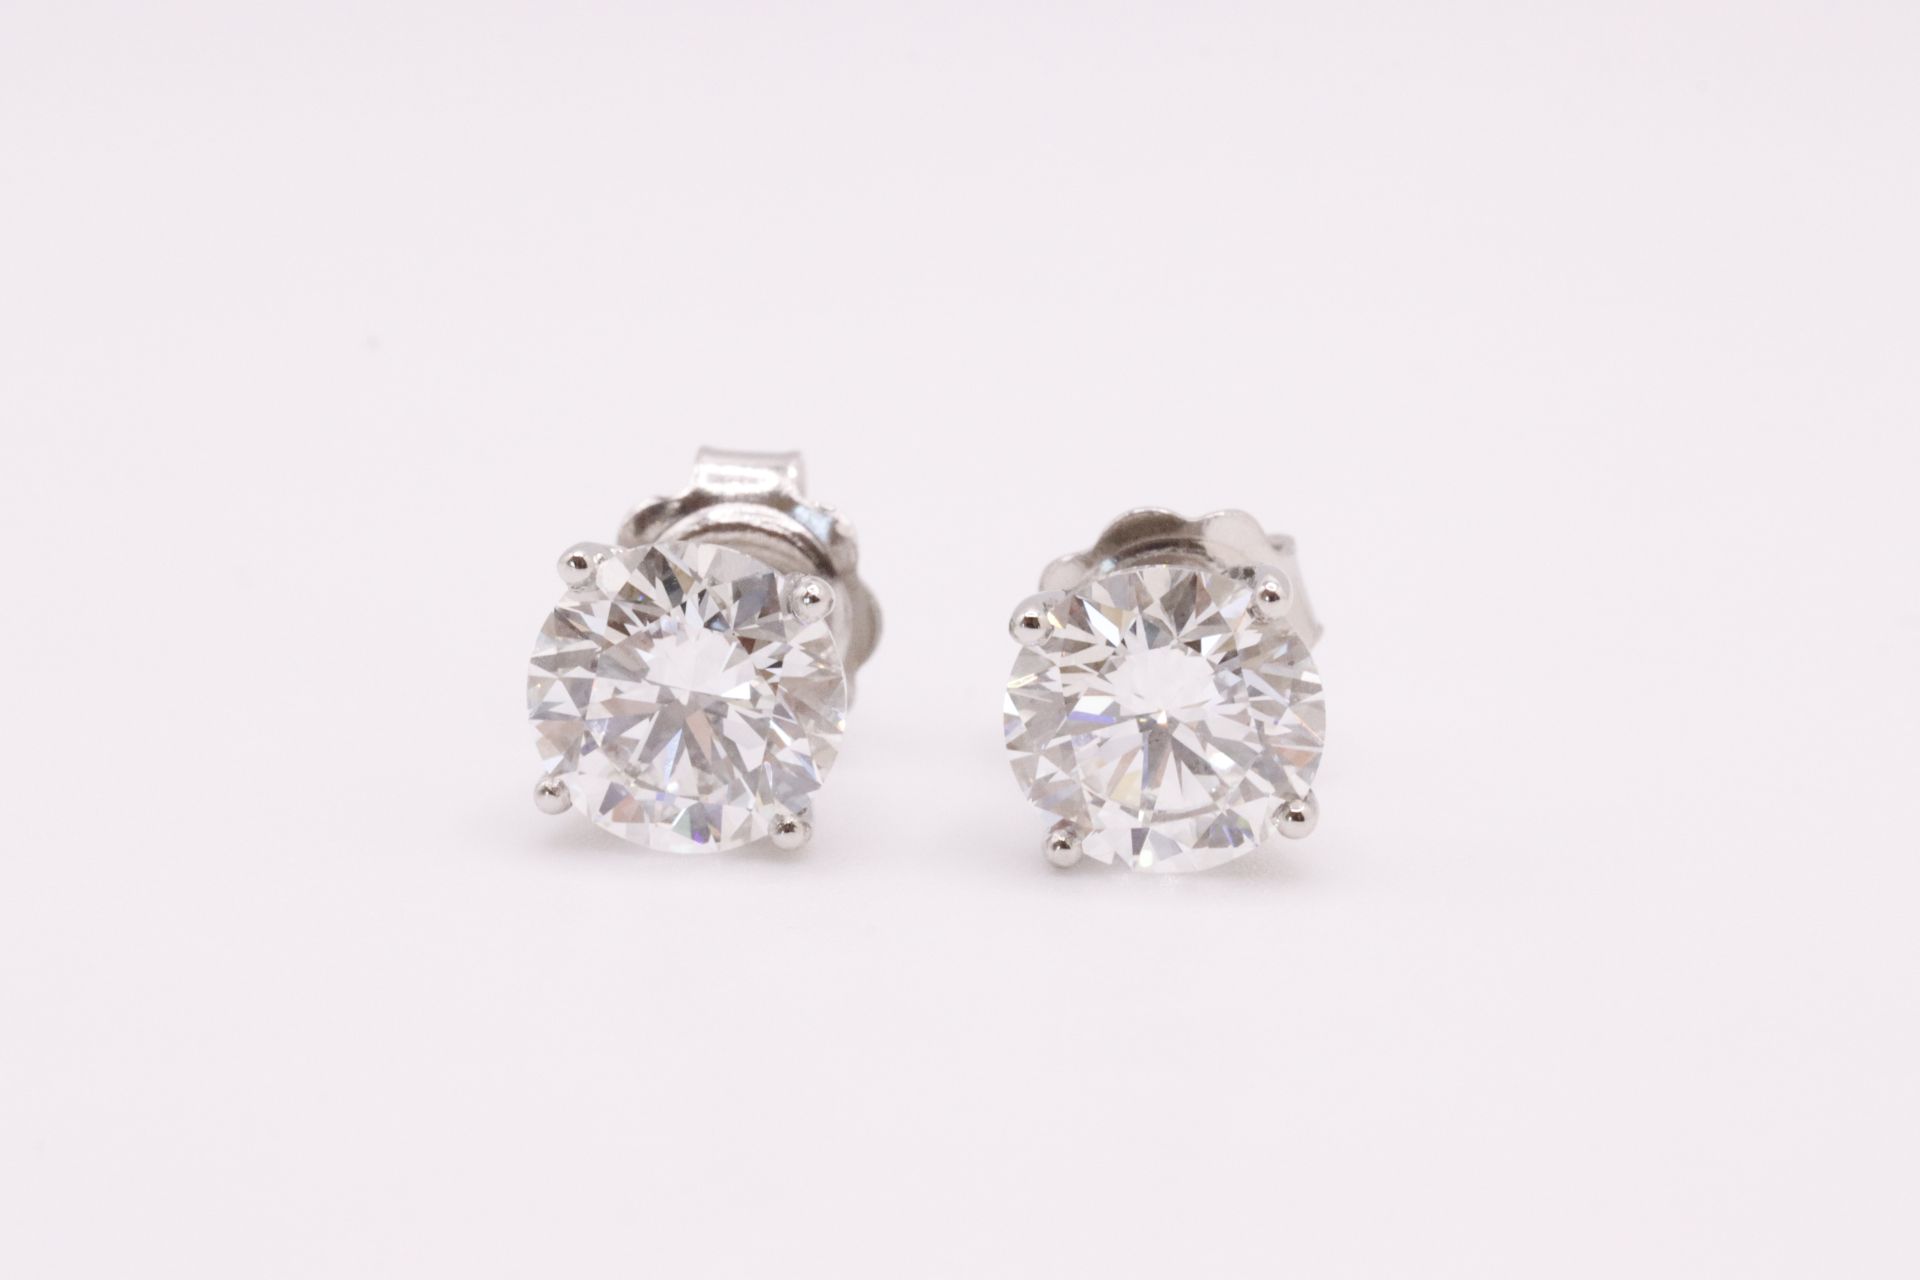 Round Brilliant Cut 2.00 Carat Diamond Earrings Set in 18kt White Gold - F Colour VVS2 Clarity - IGI - Image 2 of 5